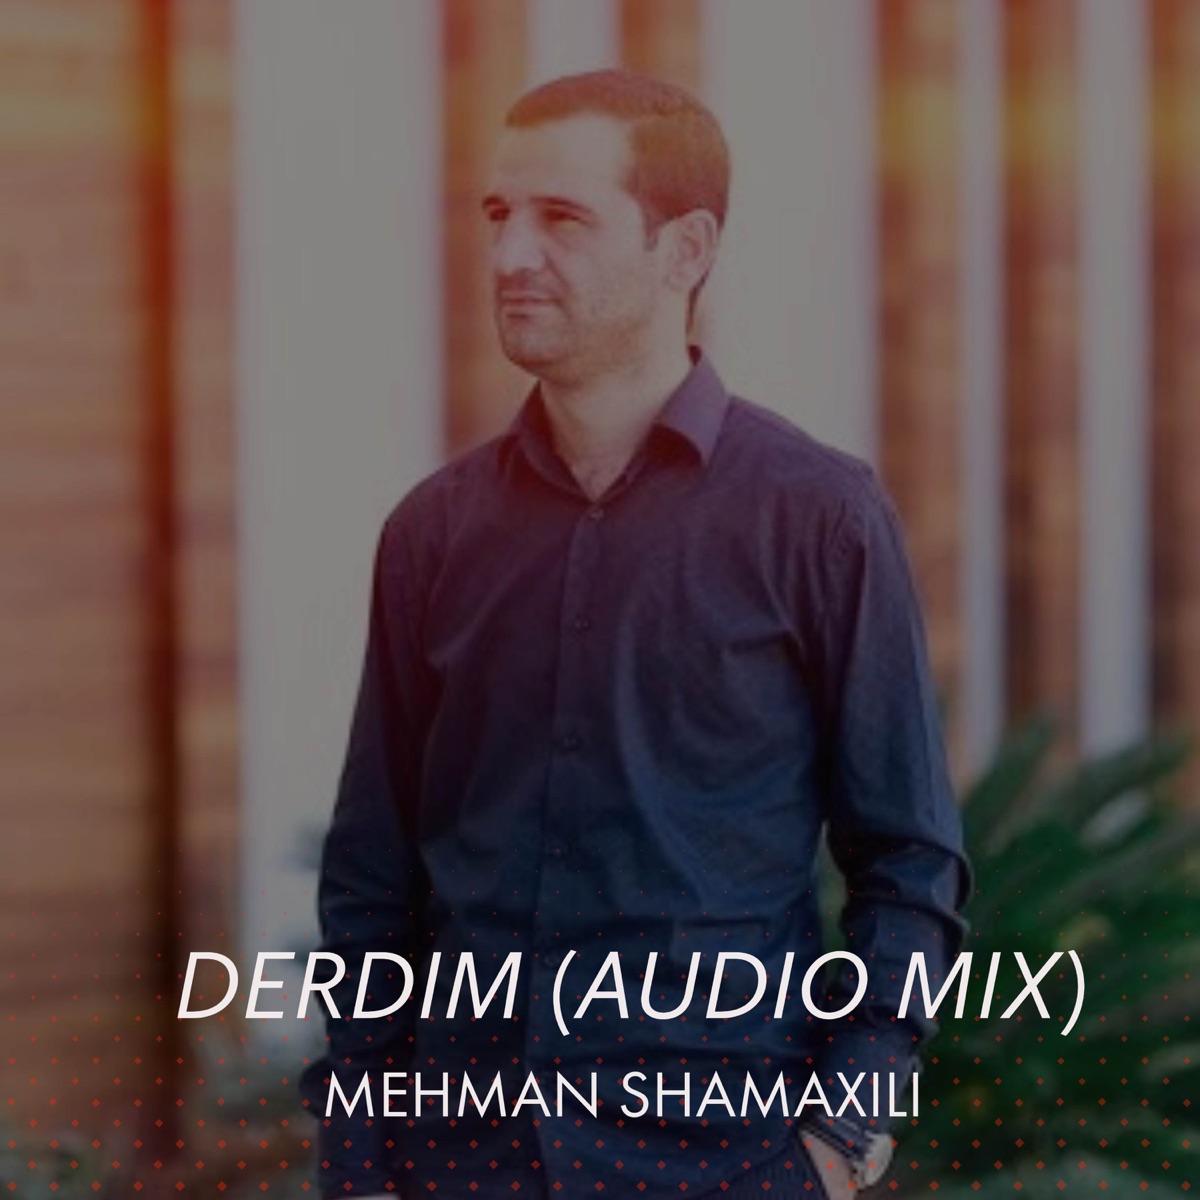 Derdim (Audio Mix) - Single - Album by Mehman Samaxili - Apple Music